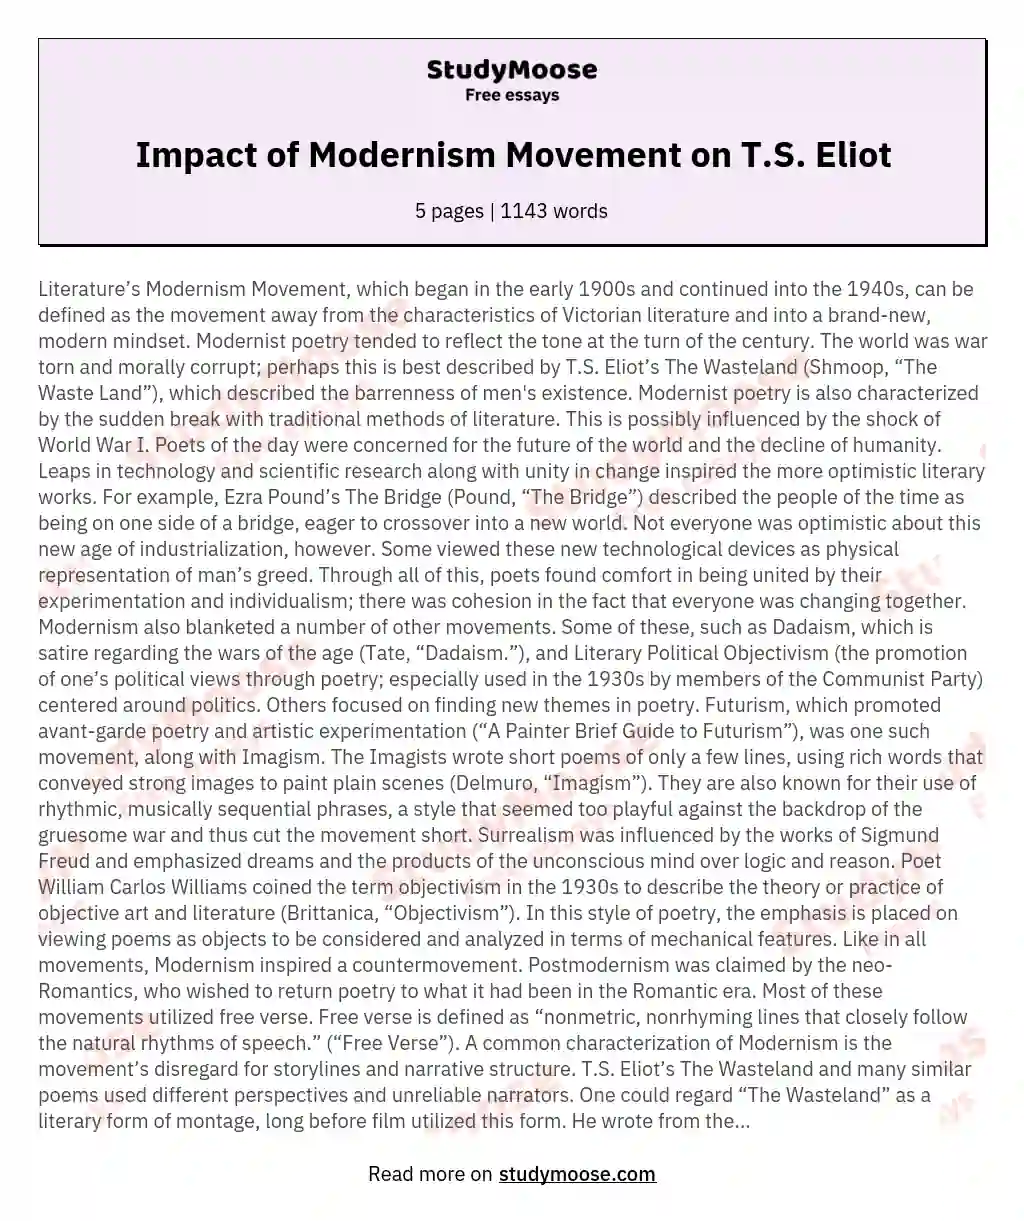 Impact of Modernism Movement on T.S. Eliot essay